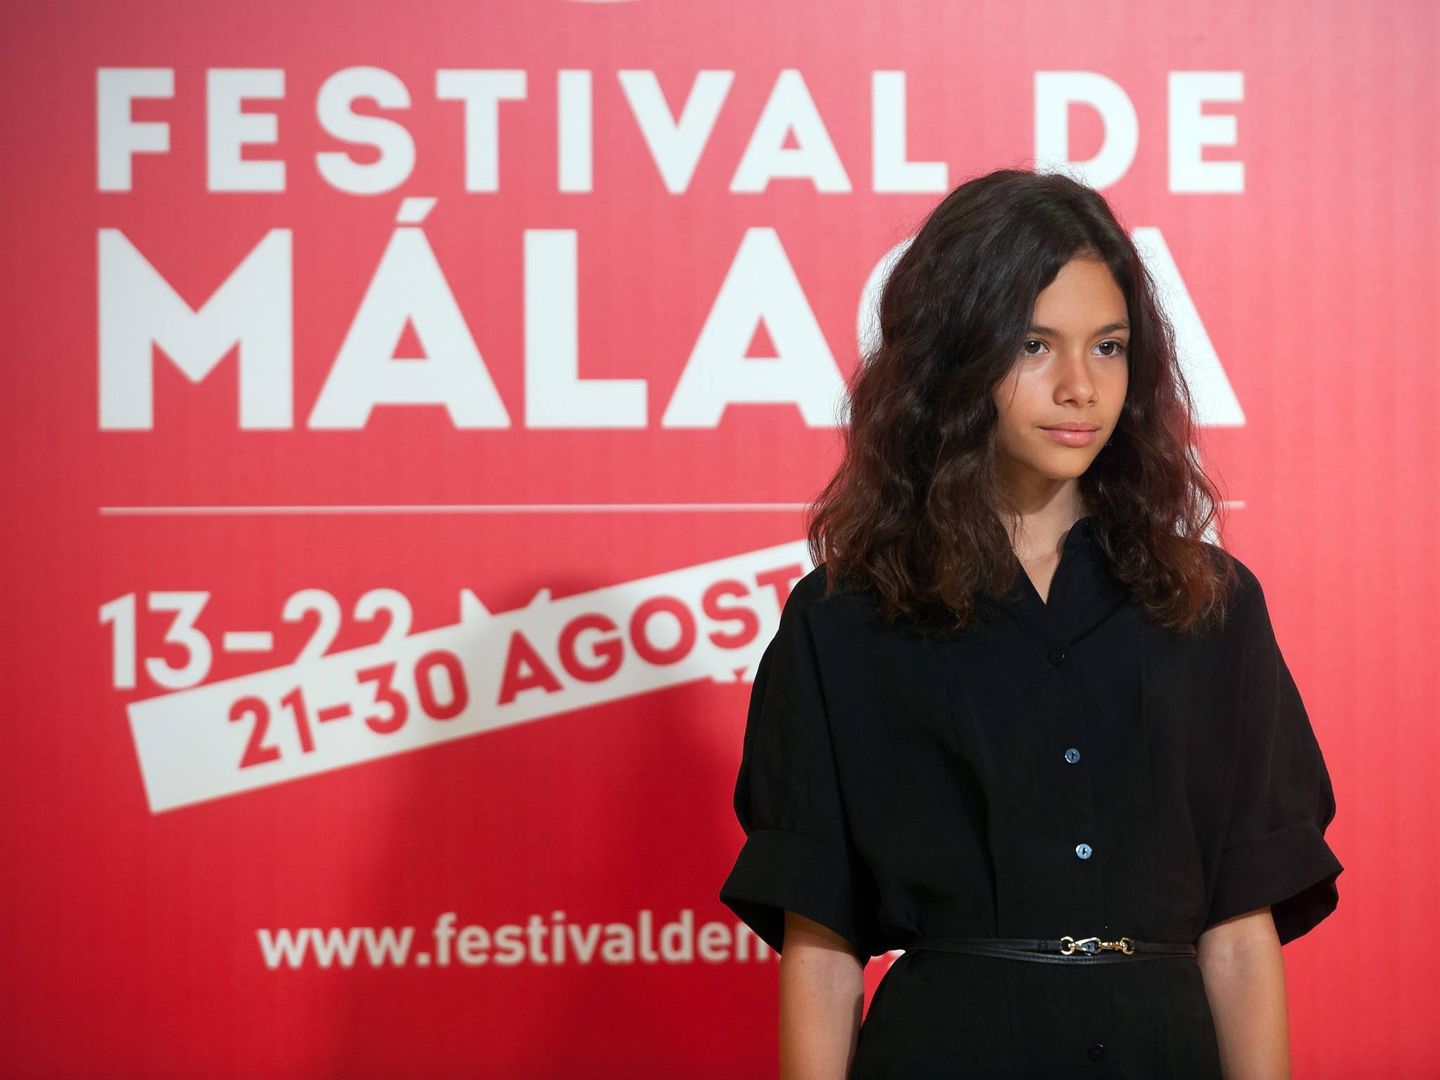 Ava Salazar Vega, en la 23 edición del Festival de Málaga este 2020. (Cordon Press)